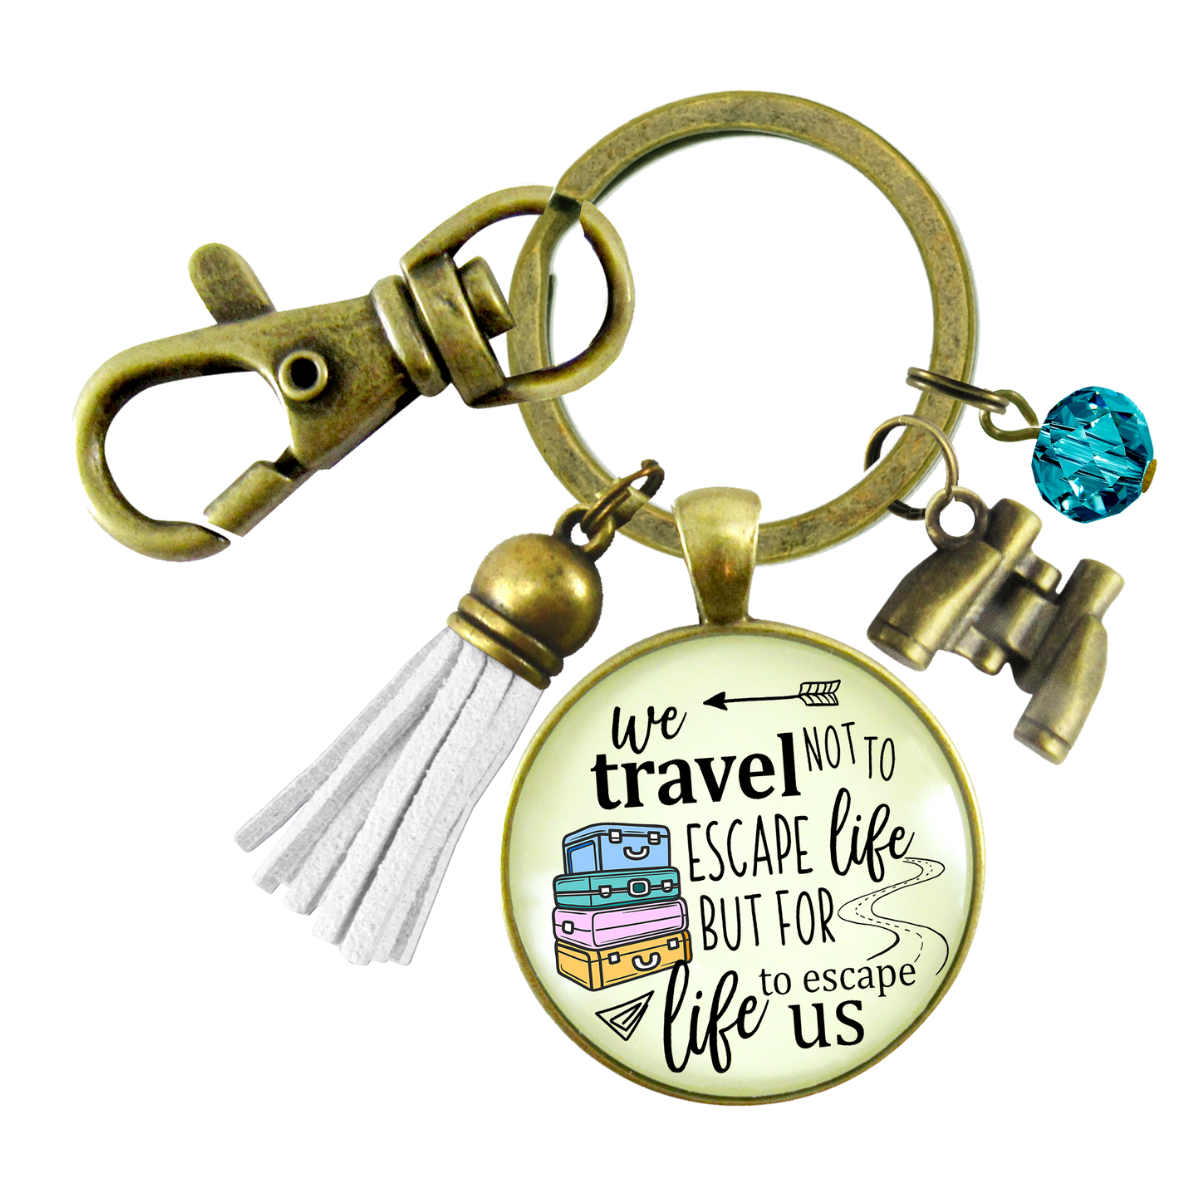 Travel Lover Tassel Keychain Wanderlust Explorer Pendant Adventure Seeker Gift Binoculars Charm  Keychain - Women - Gutsy Goodness Handmade Jewelry